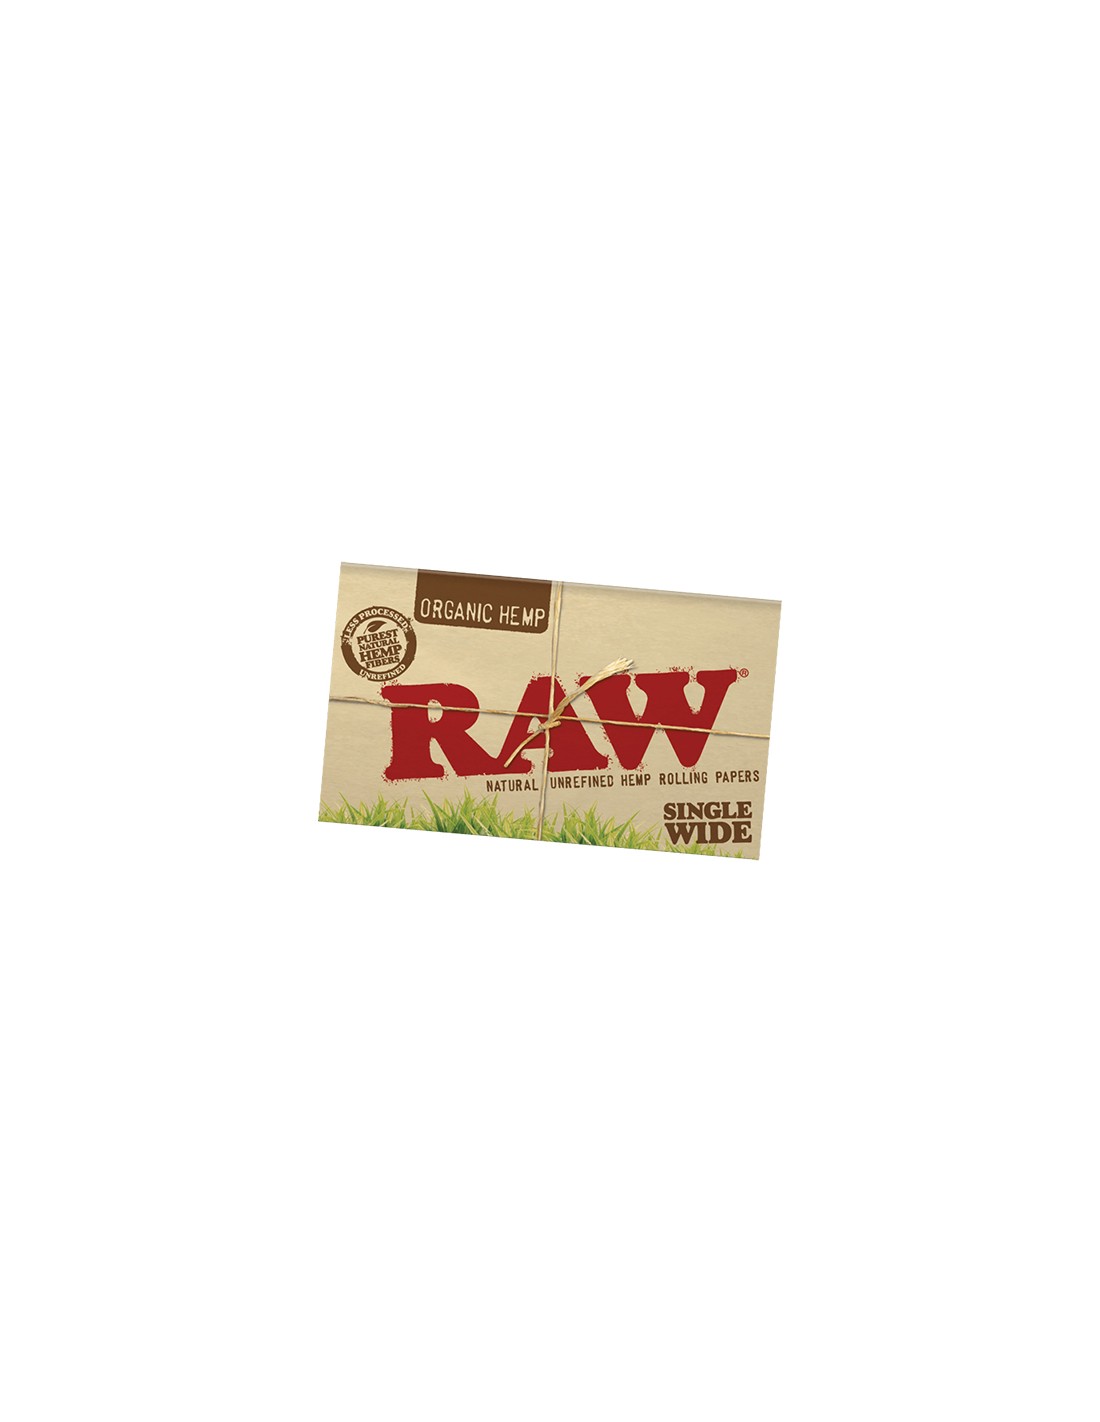 raw organik joint paper rolling paper single wide